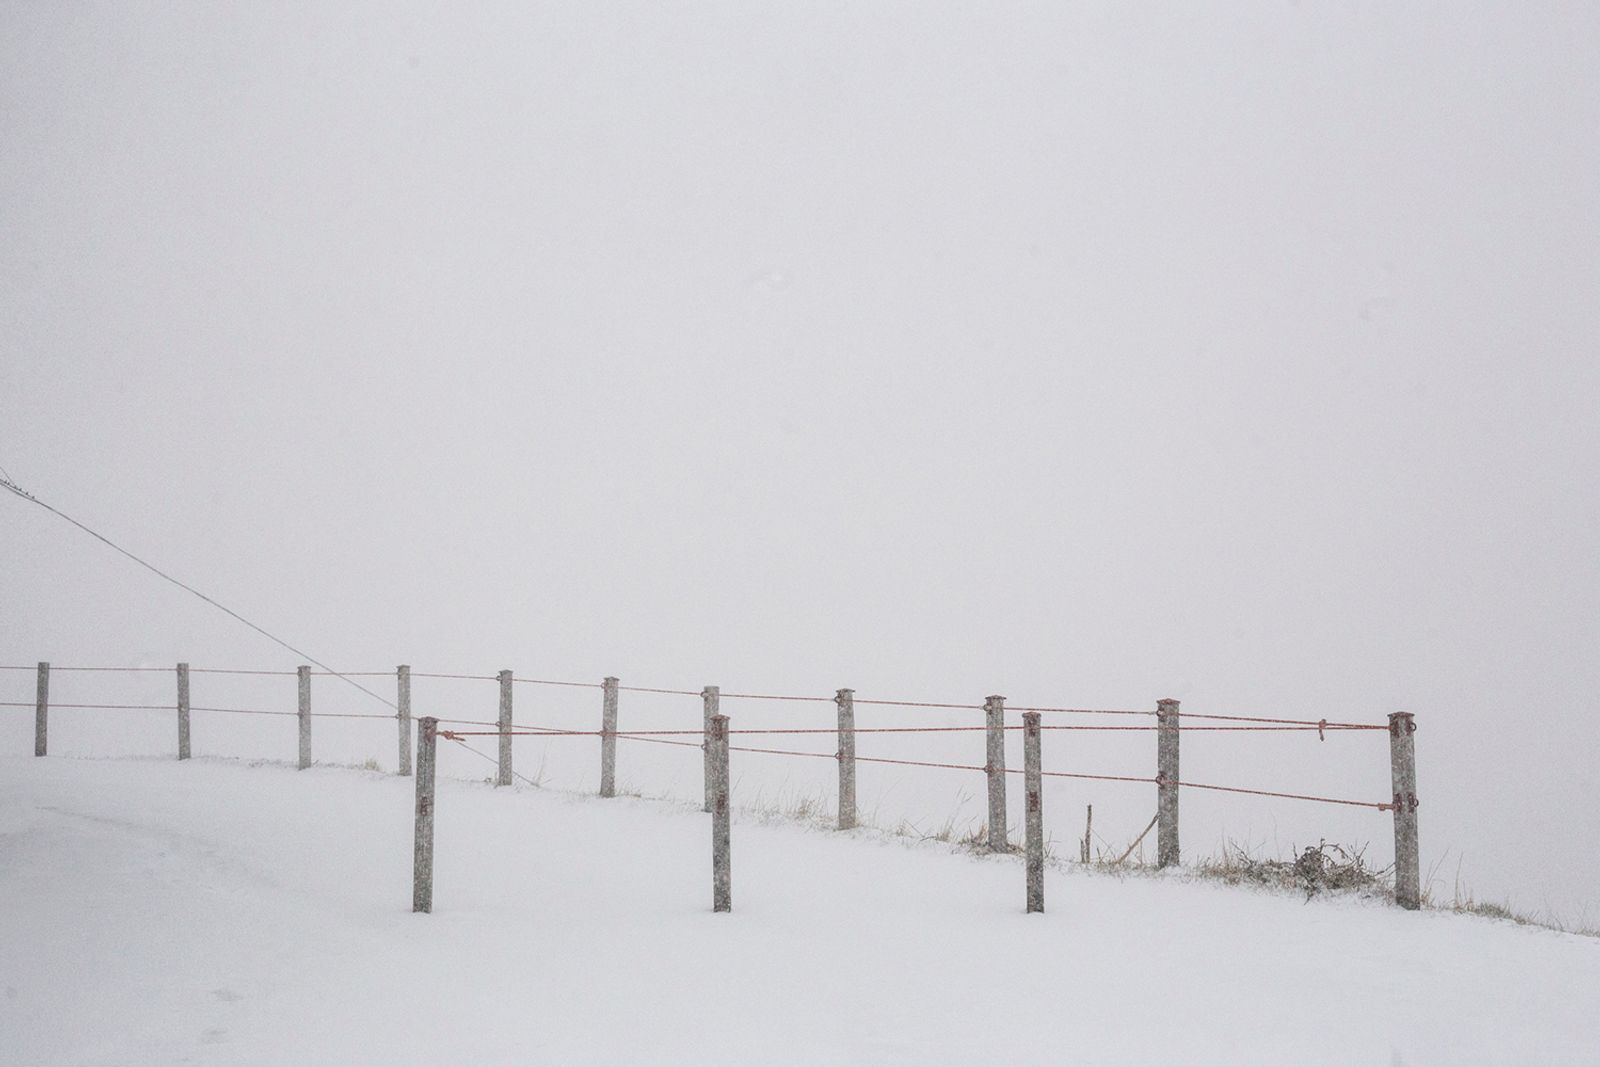 © Linda Pezzano - Image from the La neve nel cuore photography project